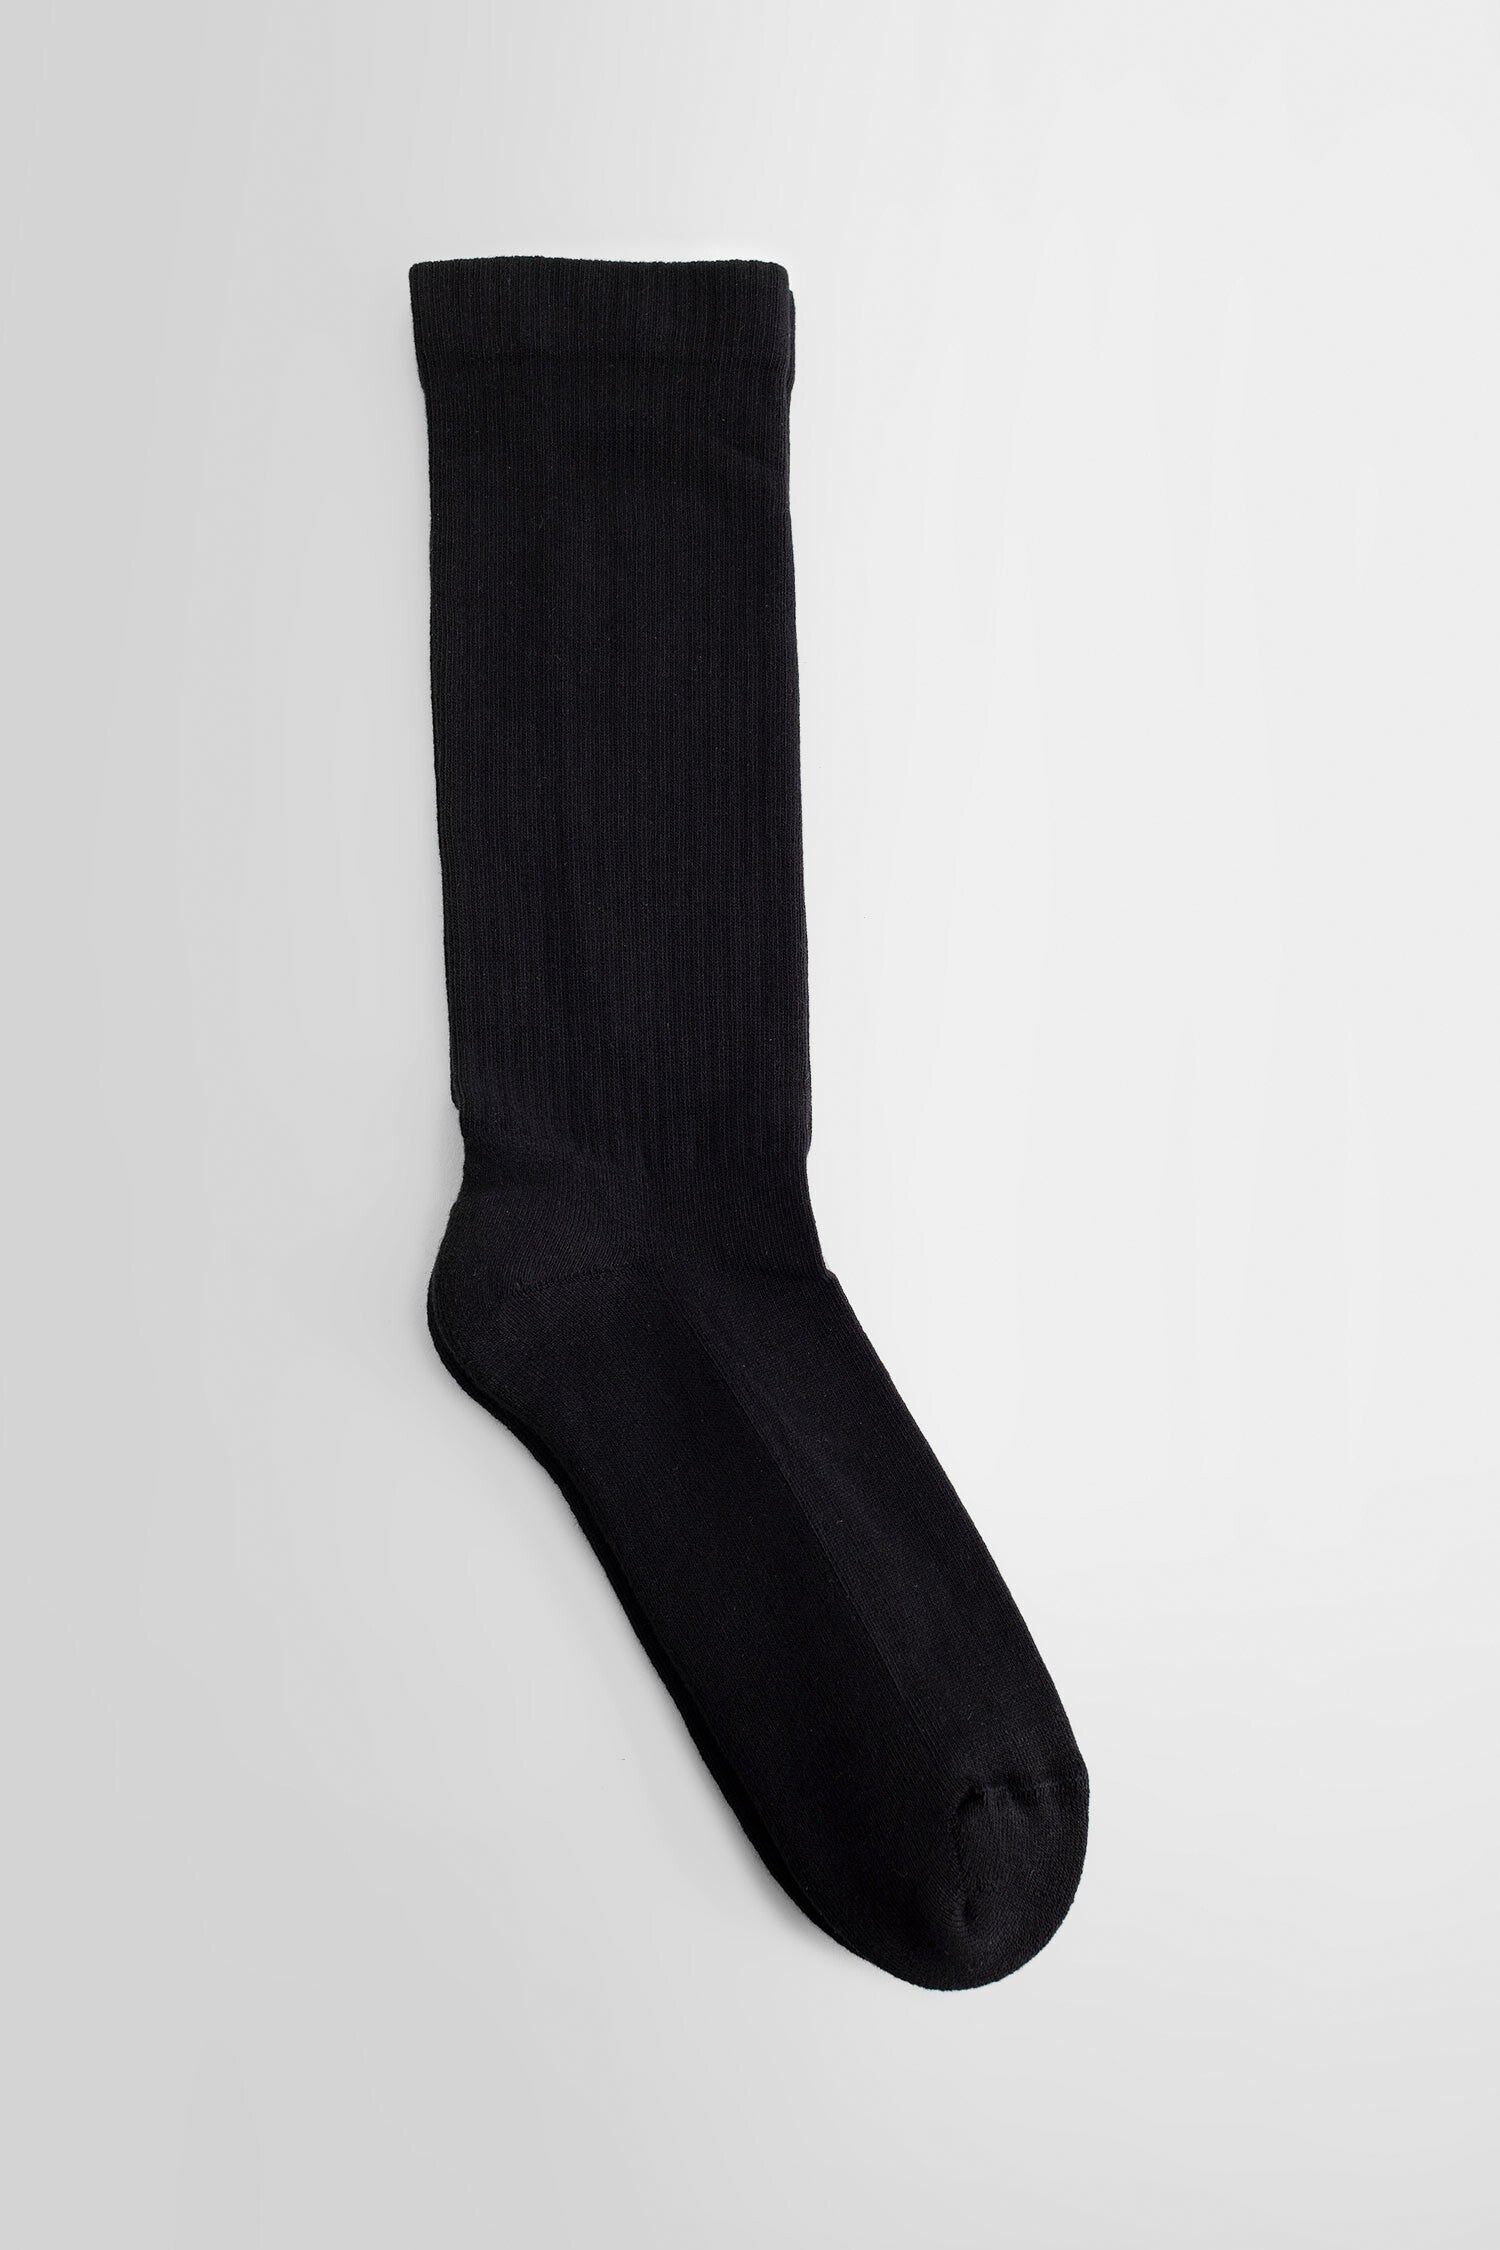 Rick Owens DRKSHDW: Black 'Lido' Socks